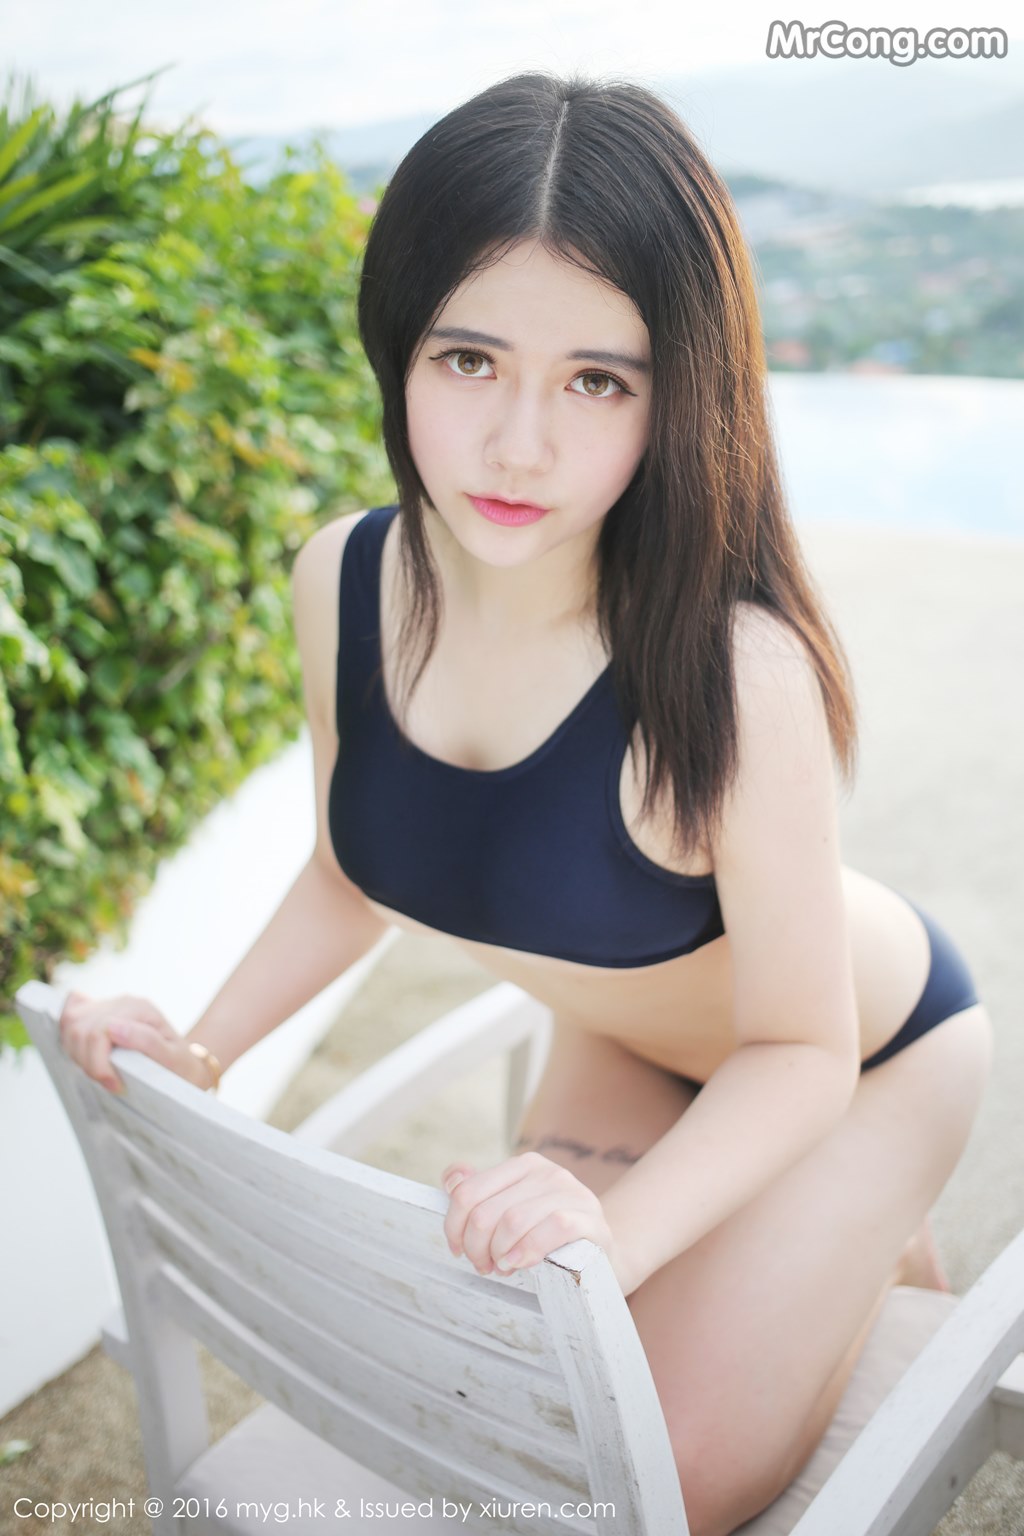 MyGirl Vol.189: Model Anna (李雪婷) (54 photos)